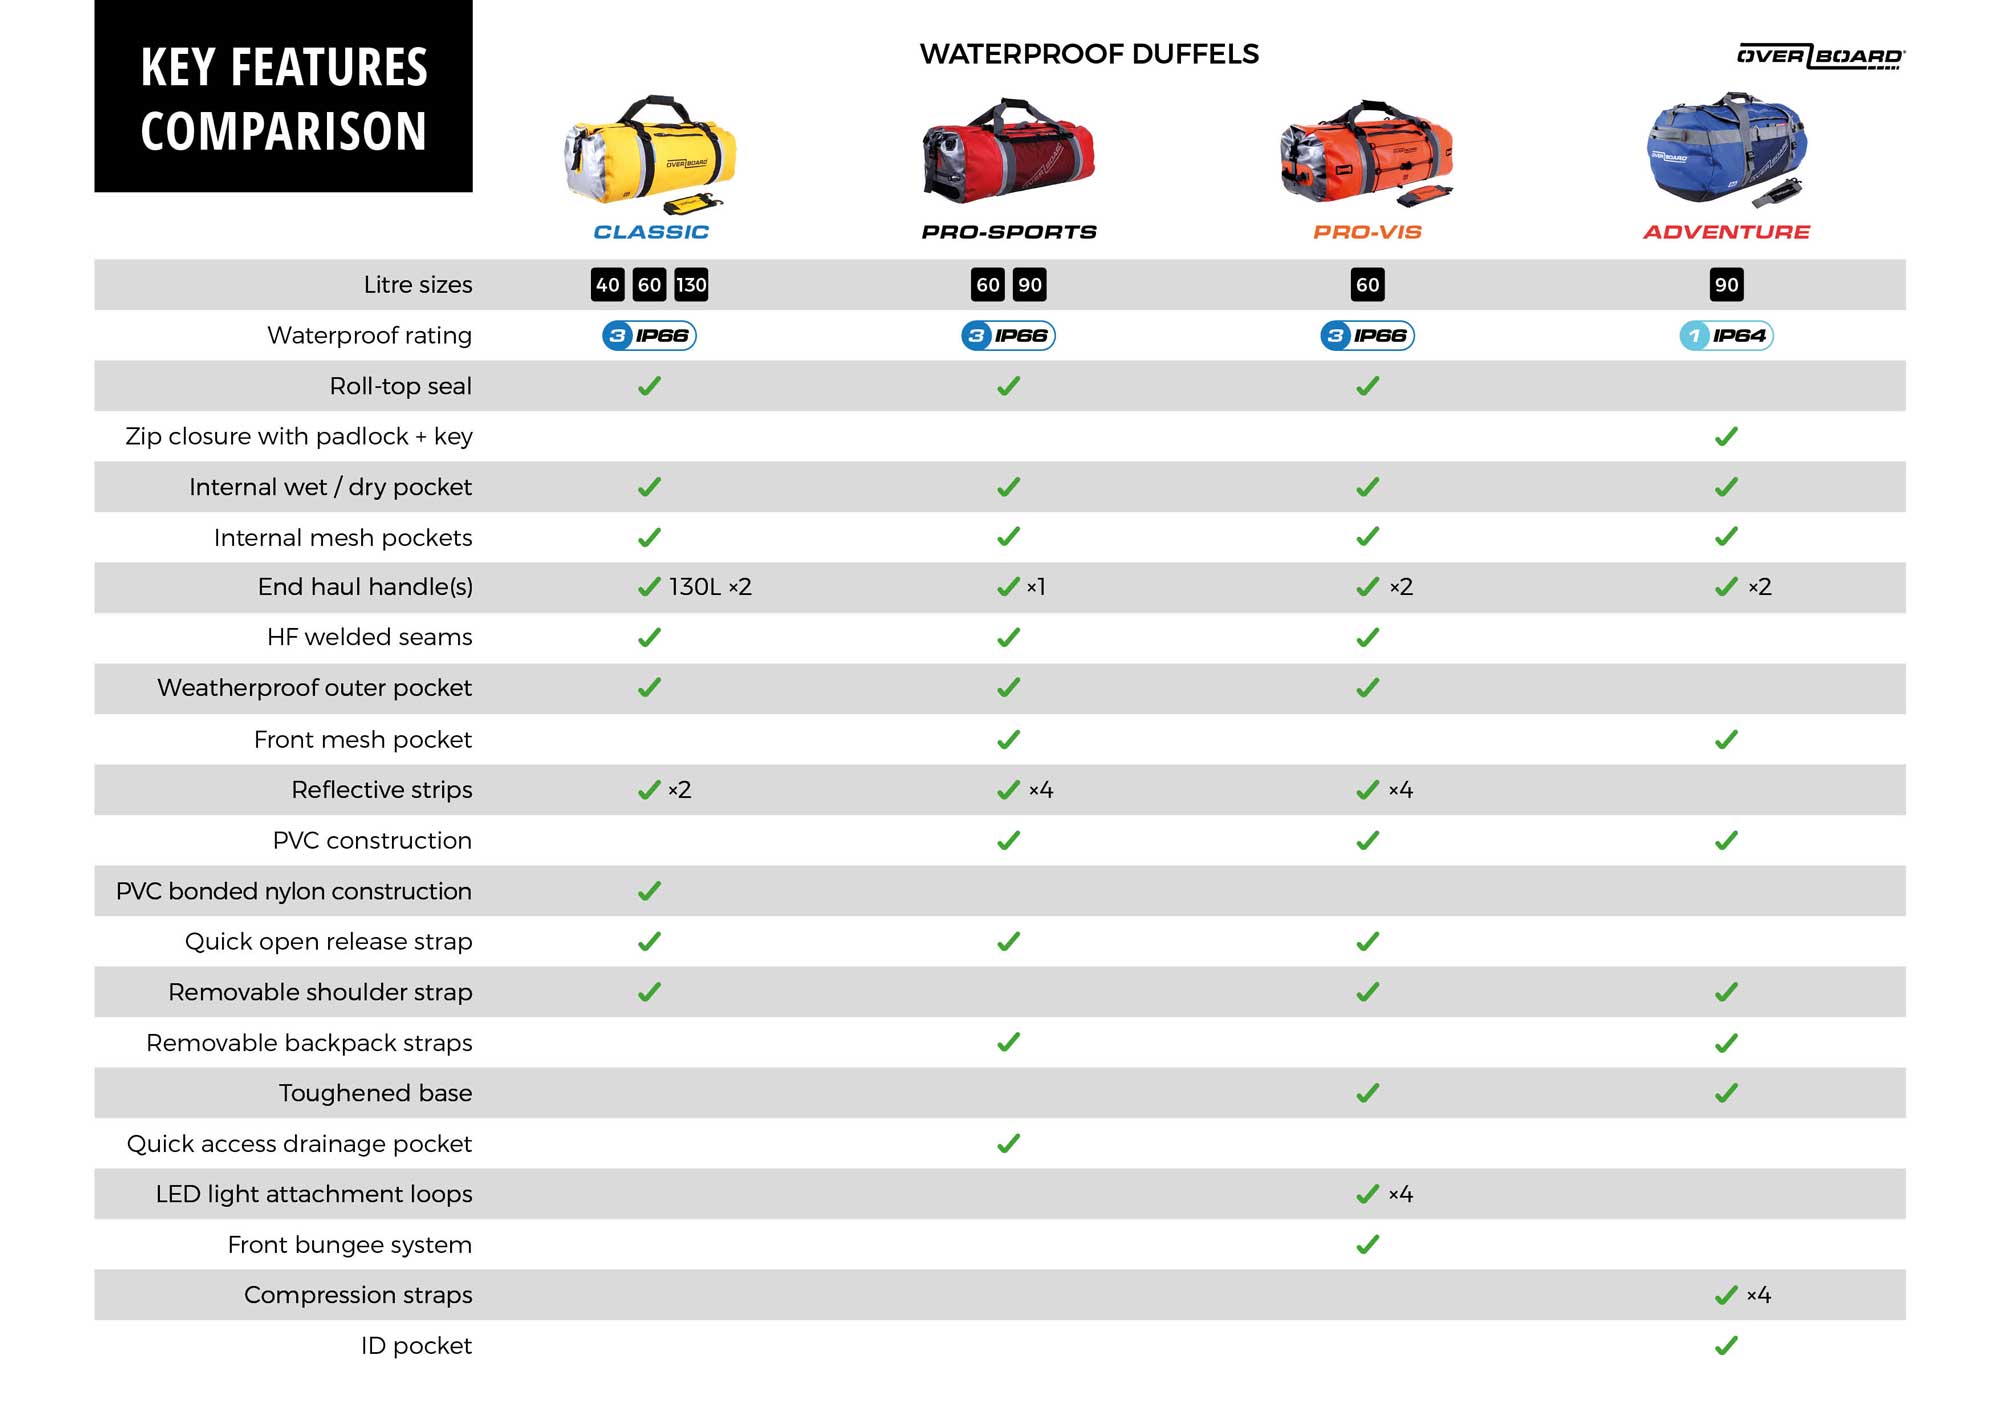 Waterproof Duffels Key Features Comparison Guide